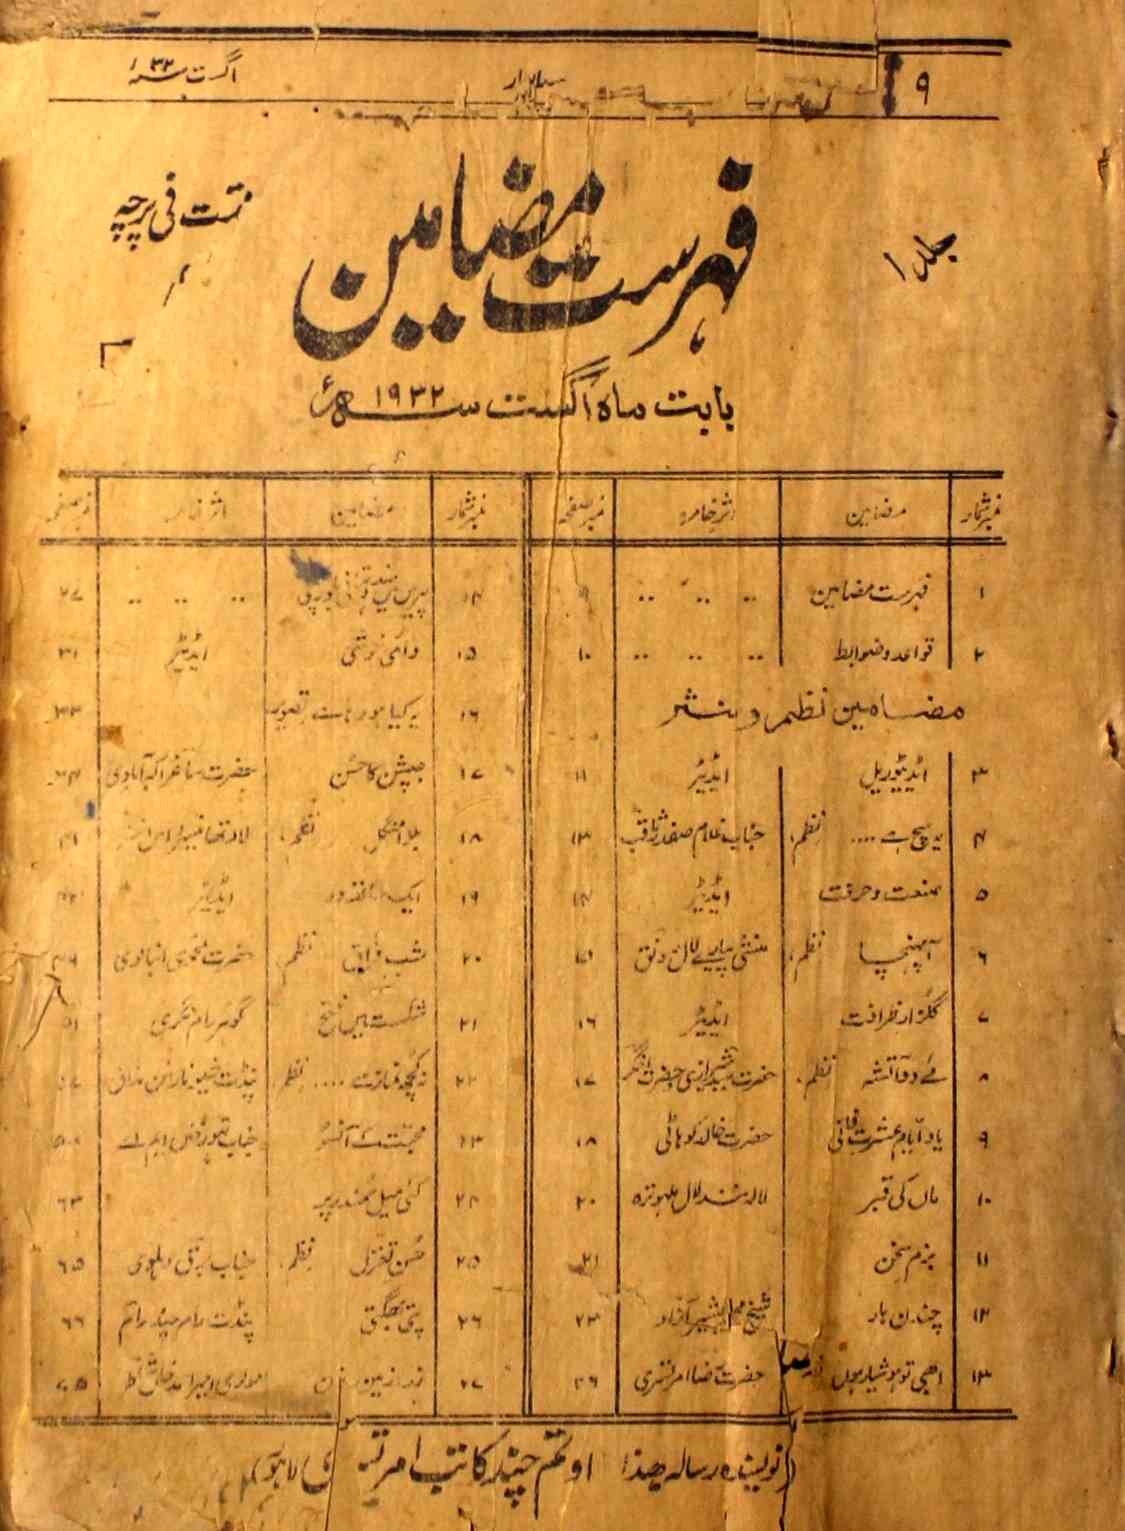 Sada Bahar Jild 1 August 1932-Svk